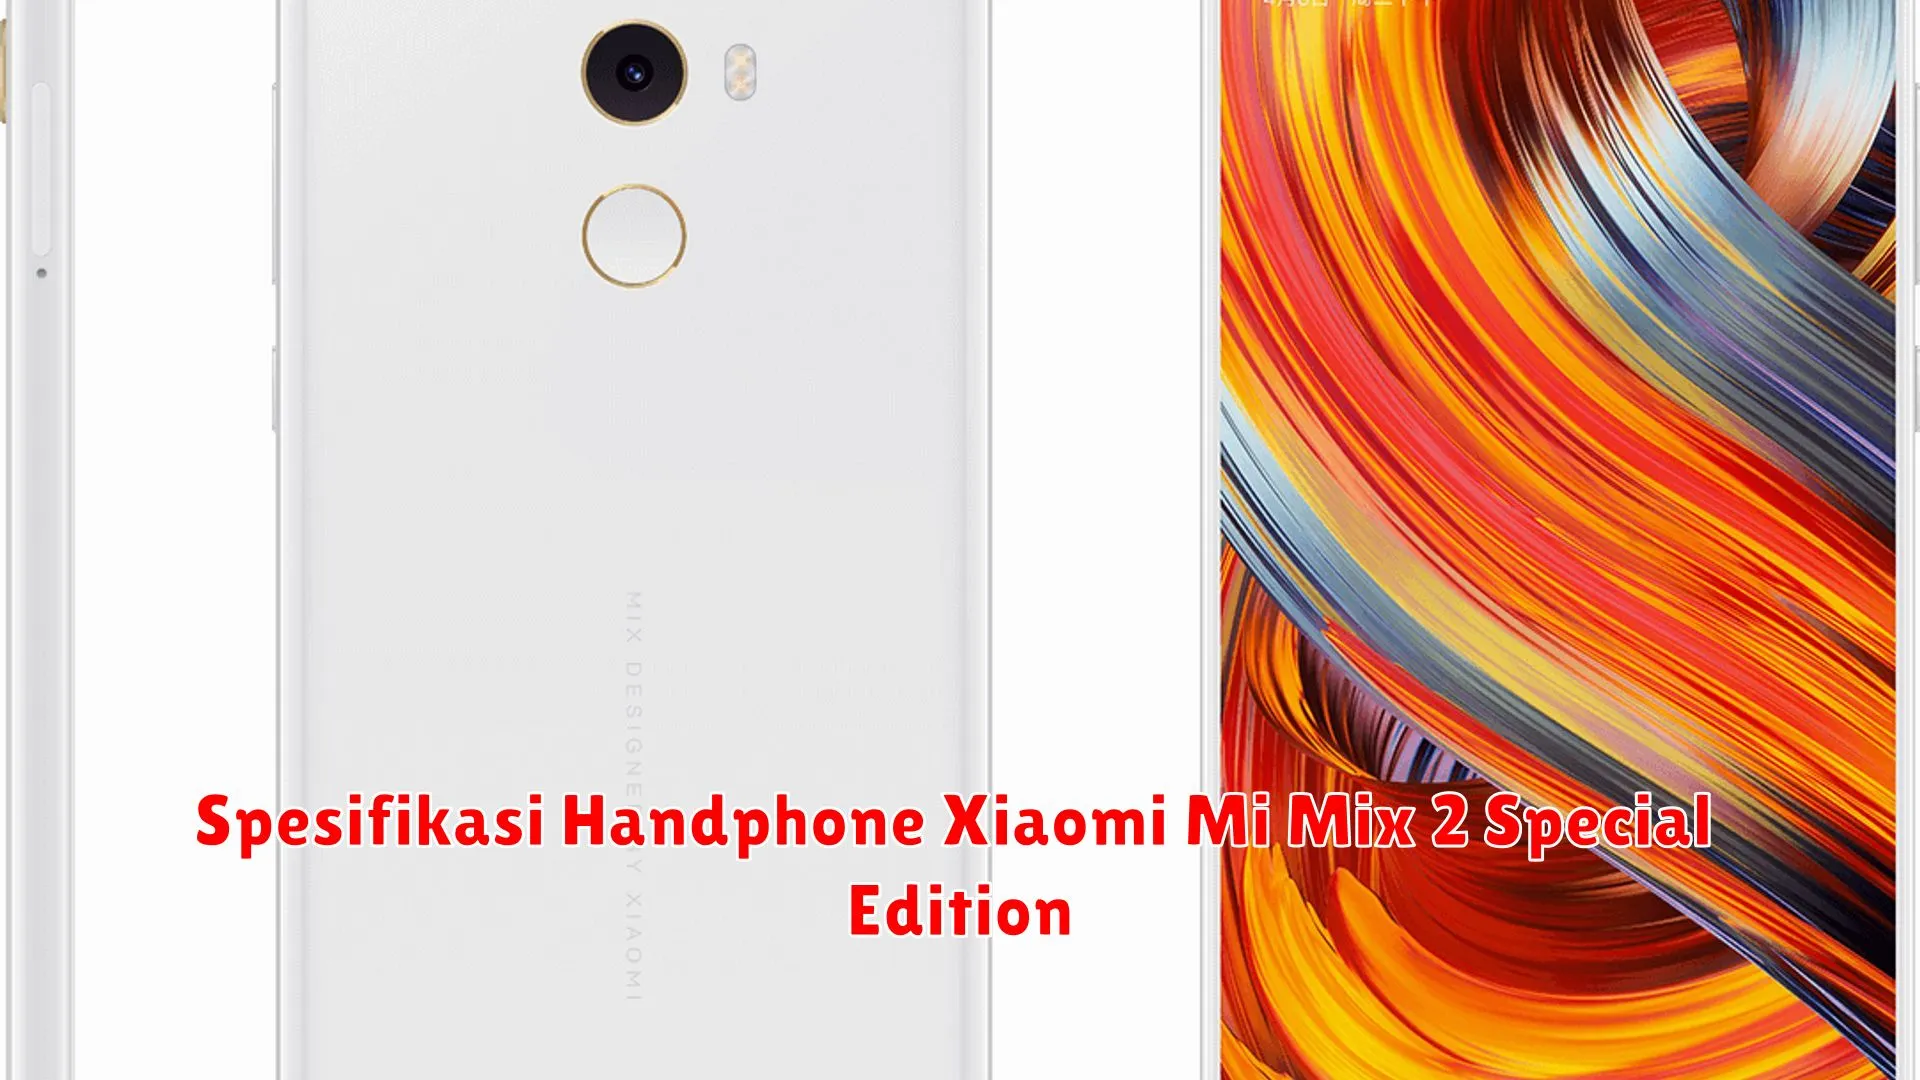 Spesifikasi Handphone Xiaomi Mi Mix 2 Special Edition